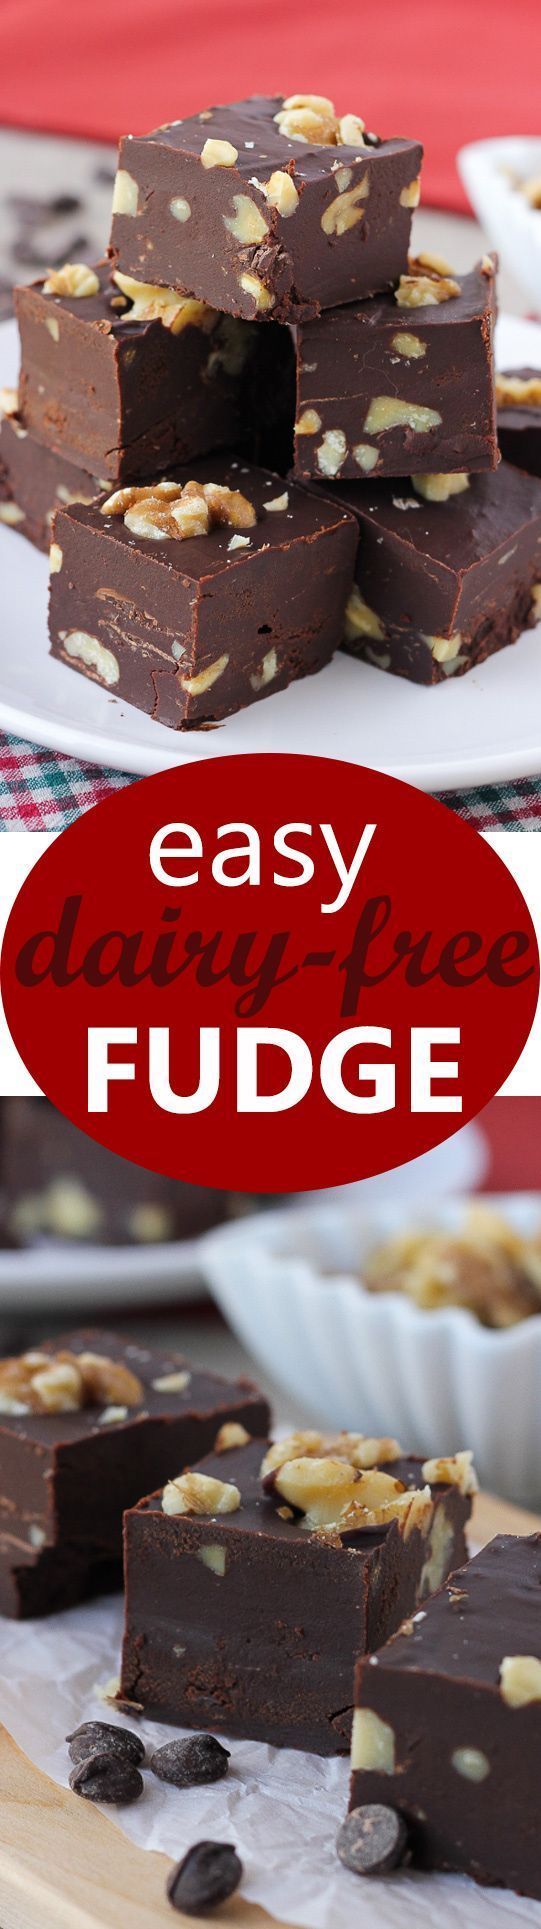 Sugar free fudge recipes for christmas